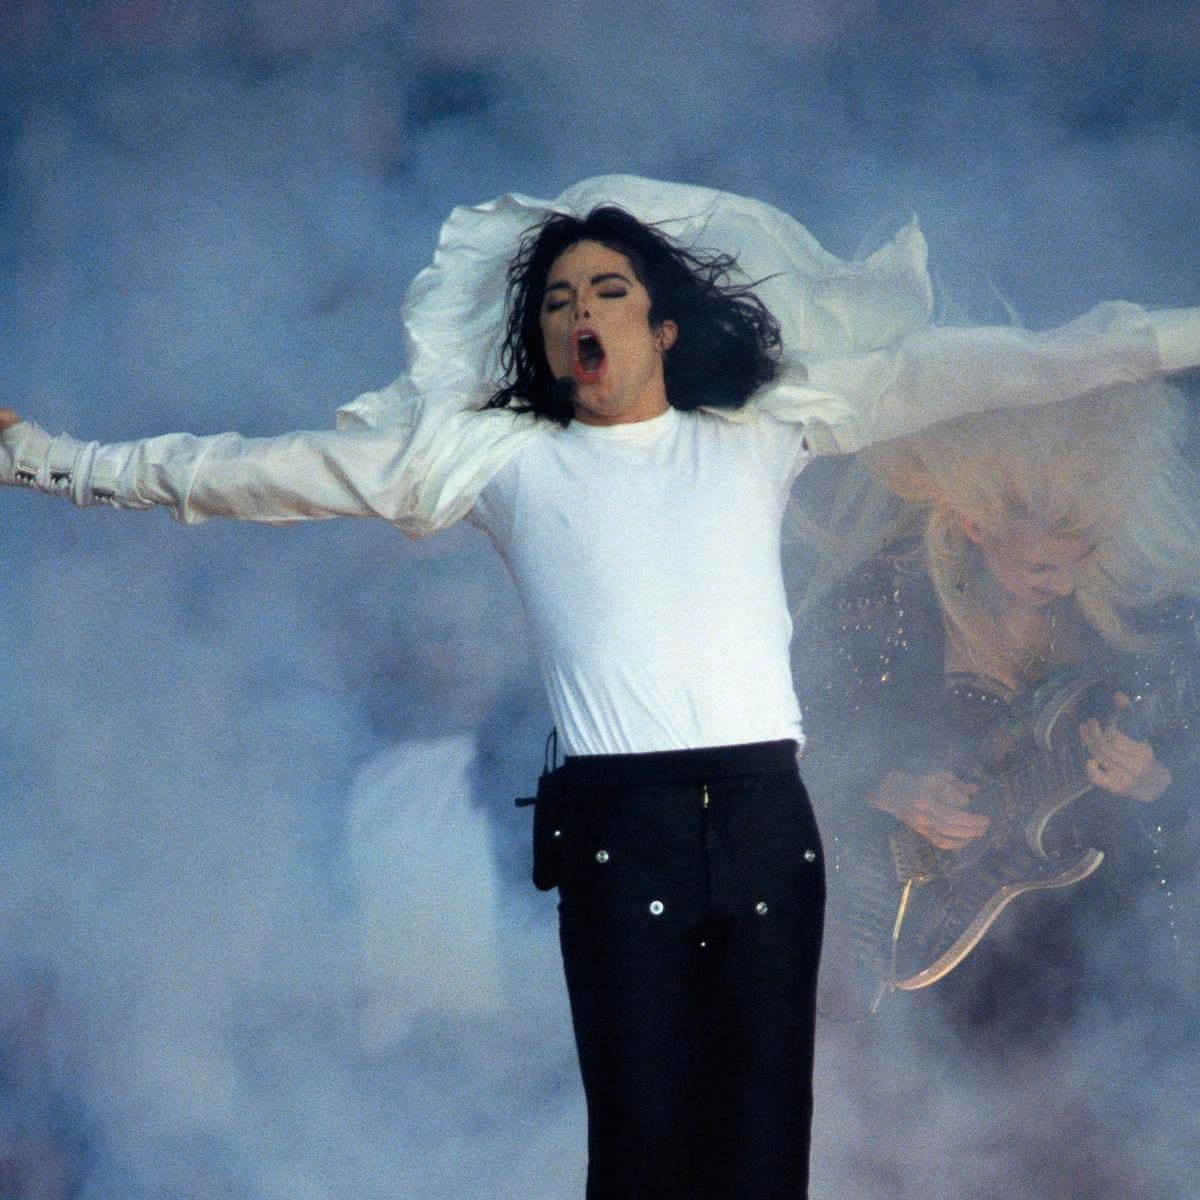 Michael Jackson in Performance